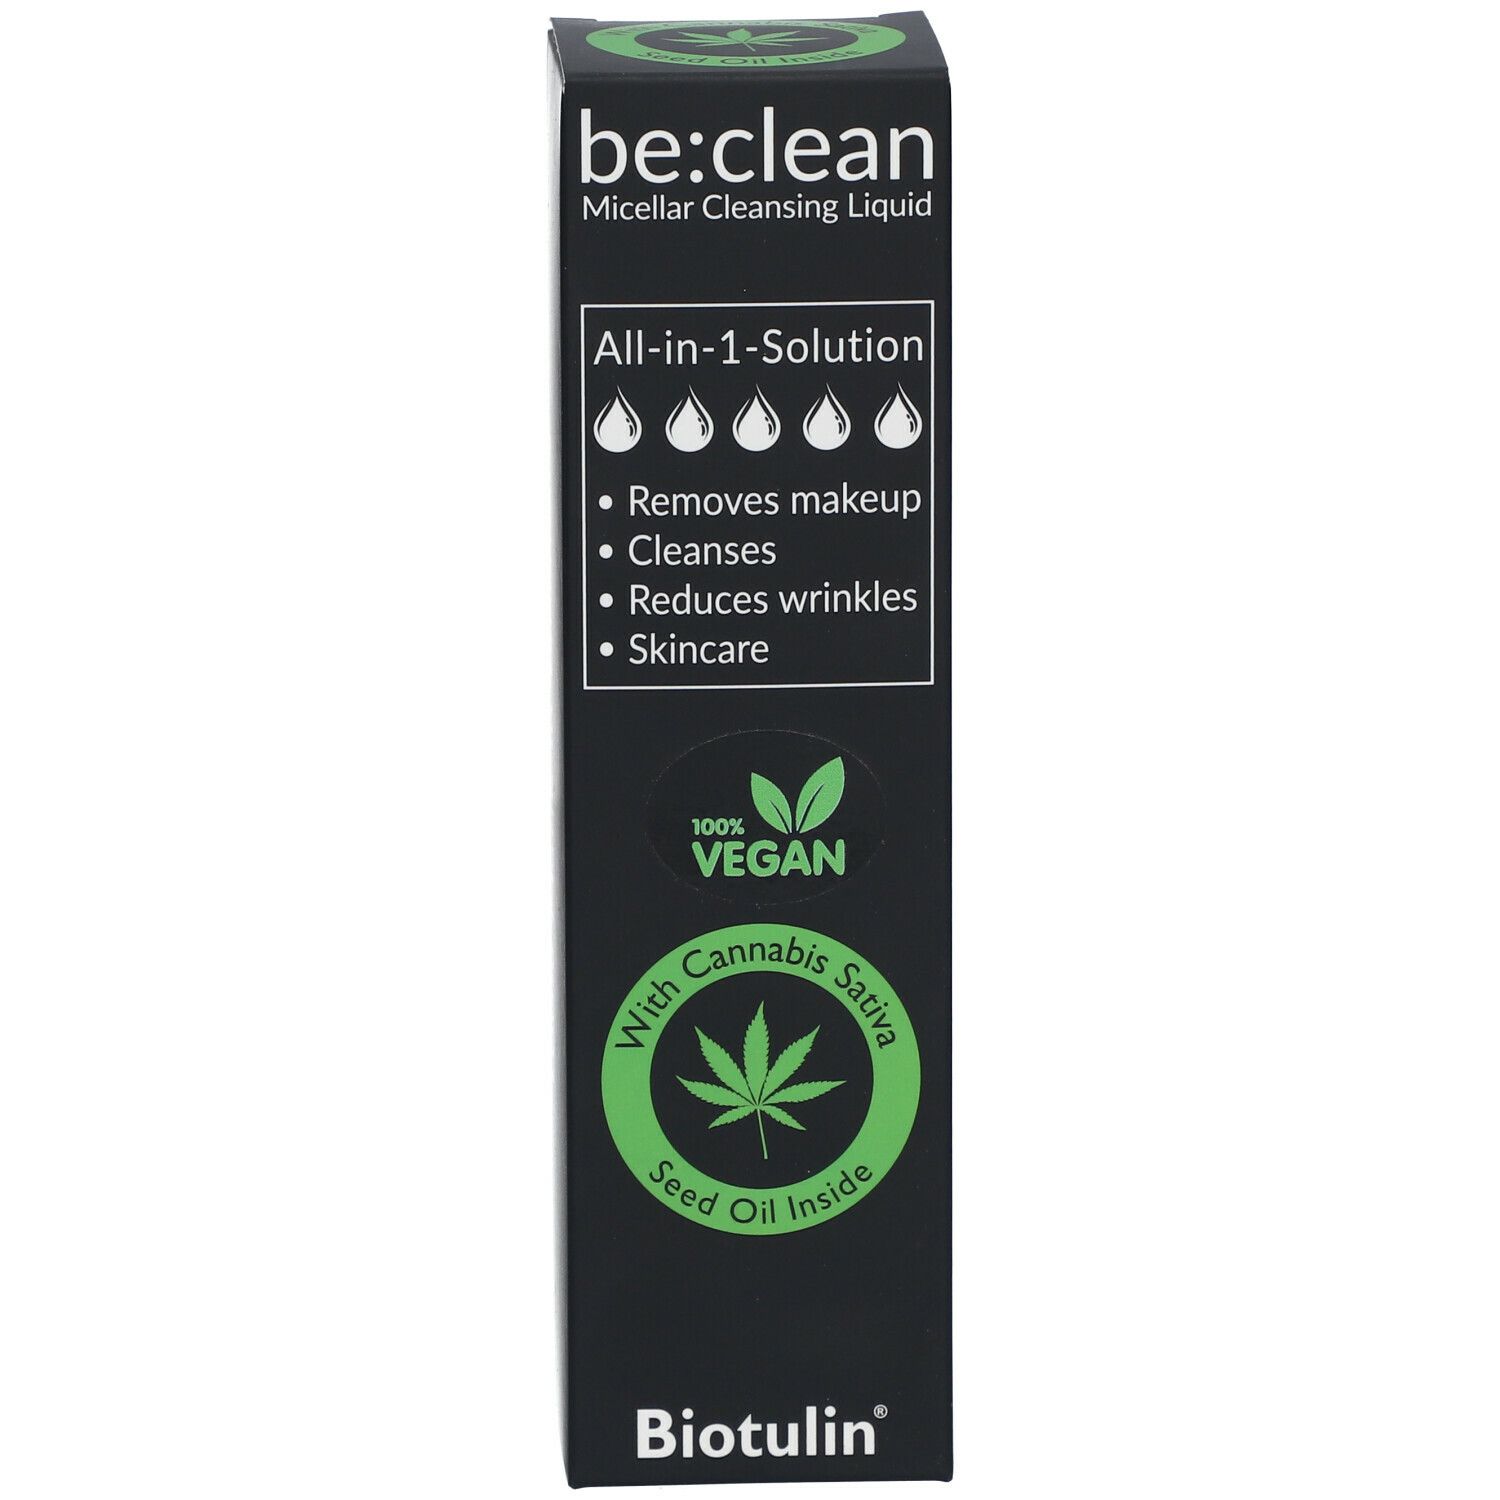 Biotulin® Mizellares Reinigungsliquid 4 in 1 be:clean